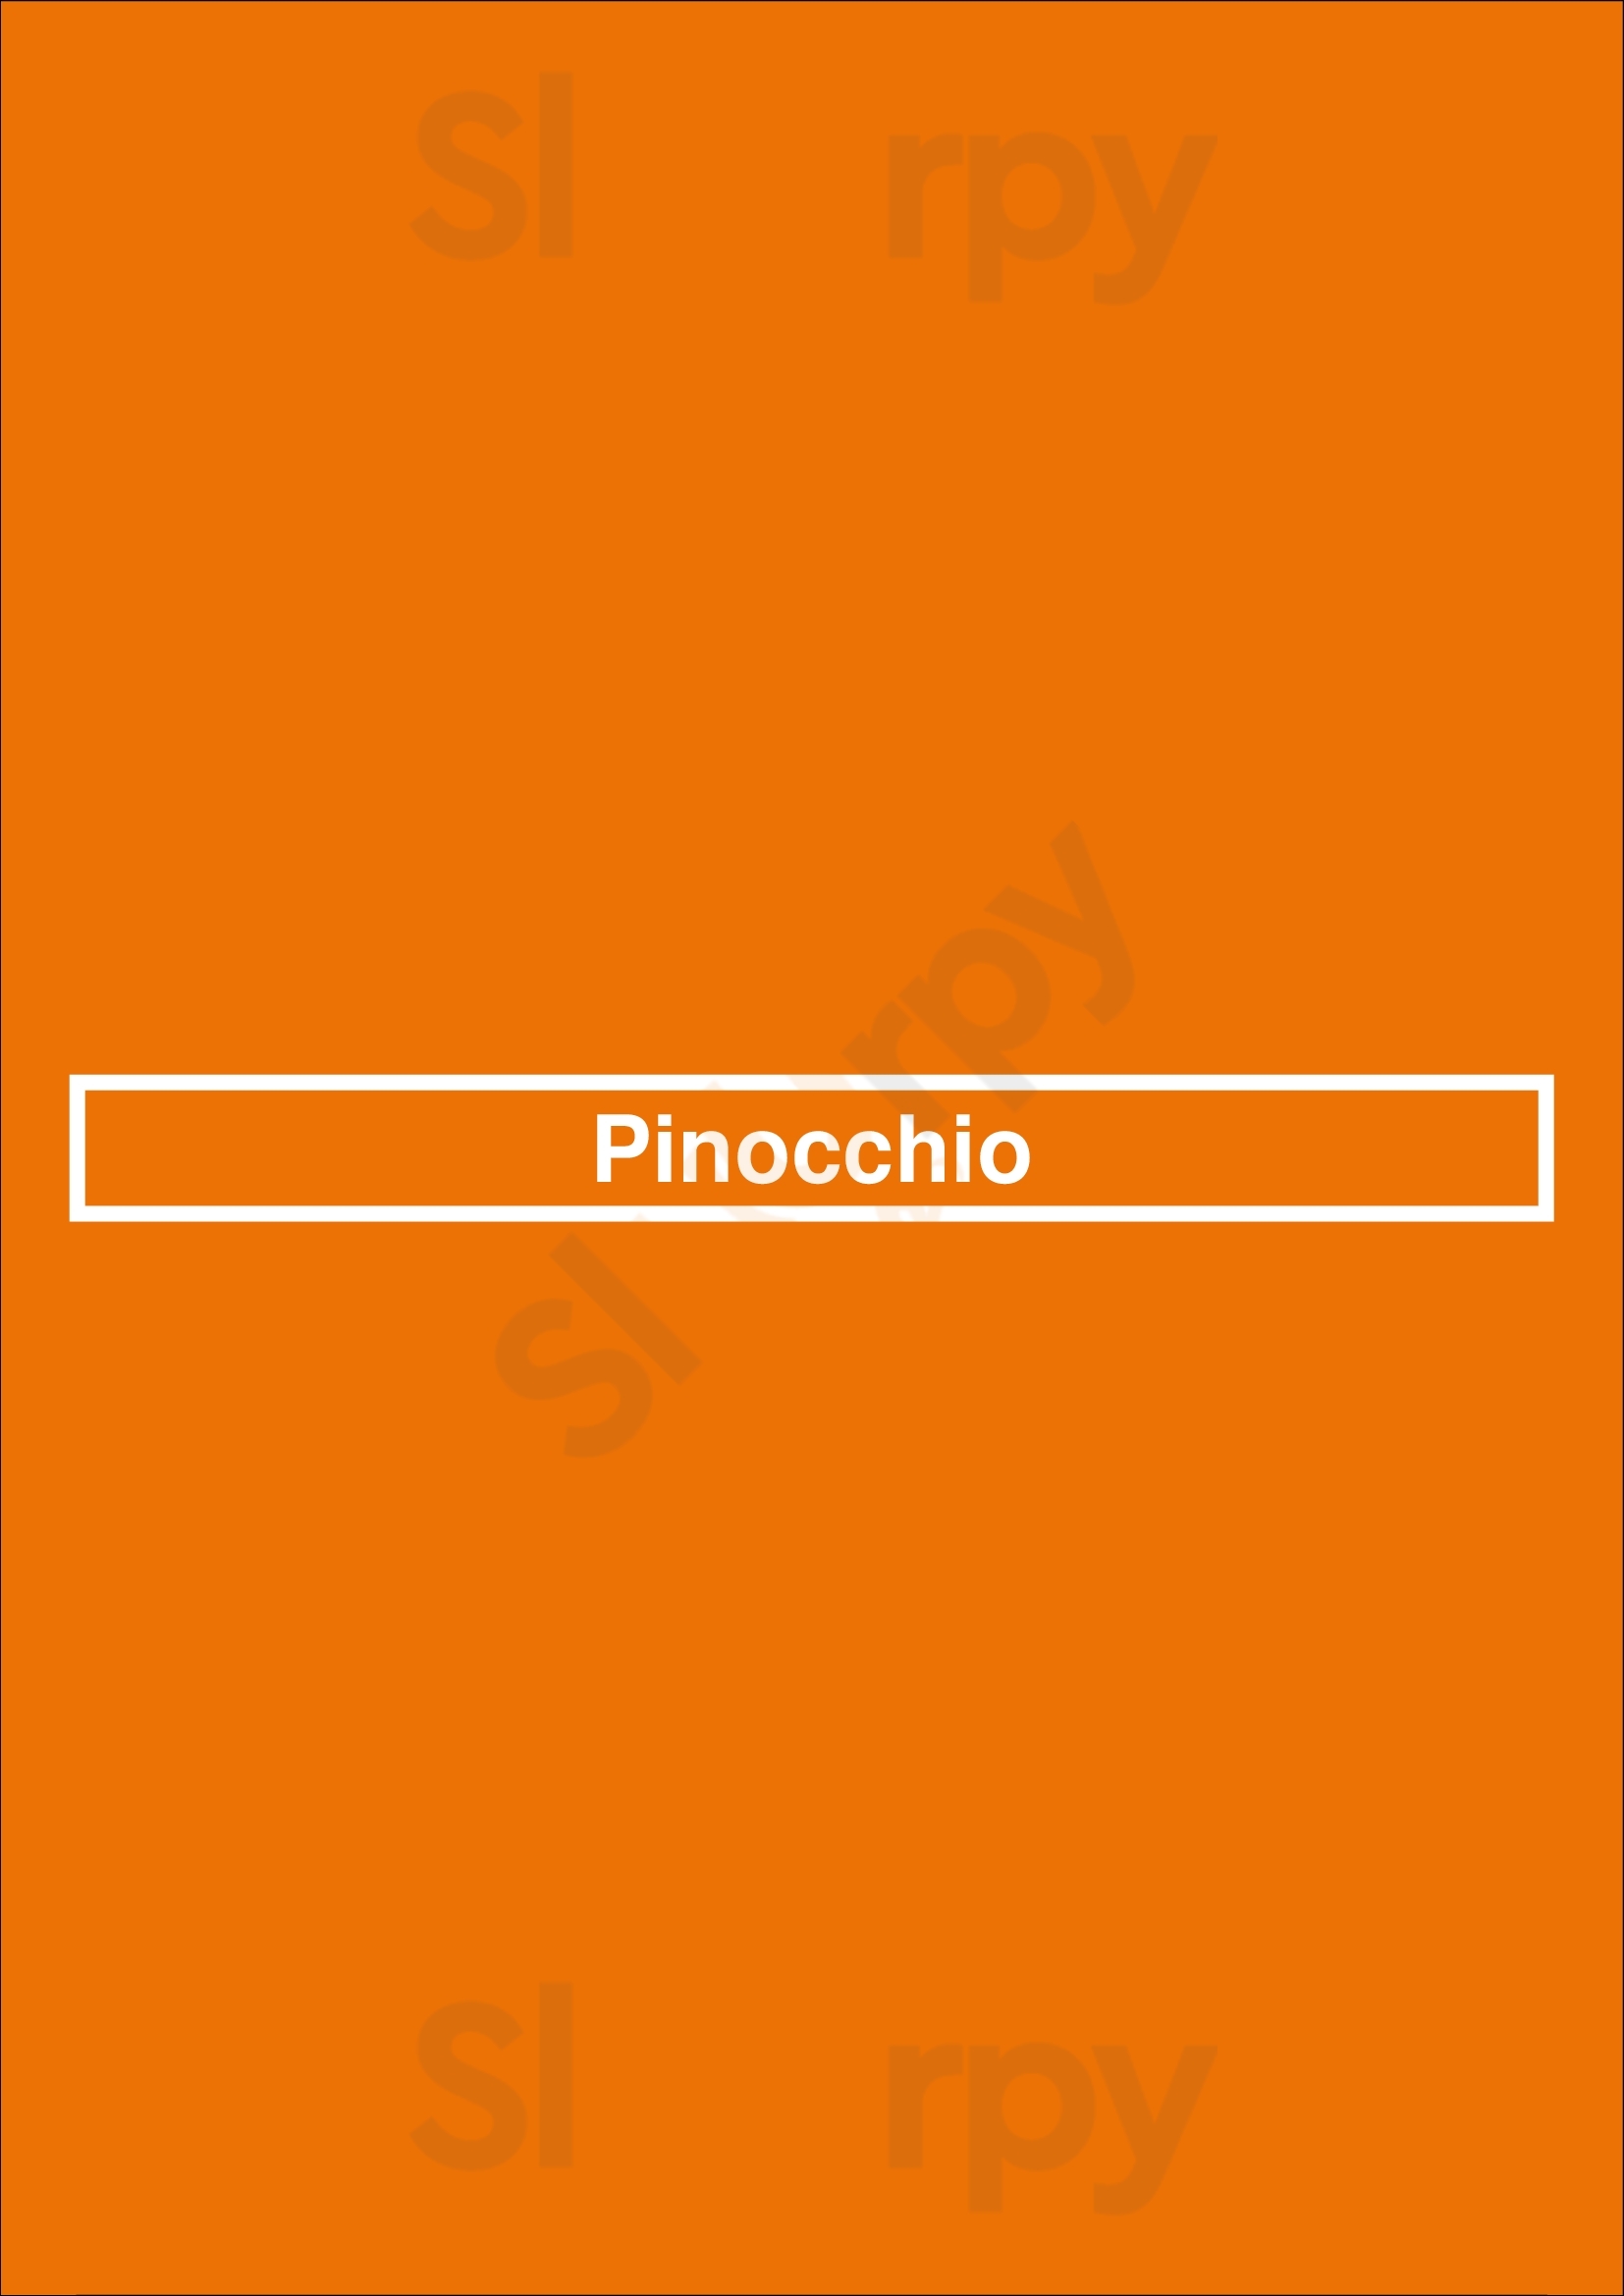 Pinocchio Den Haag Menu - 1